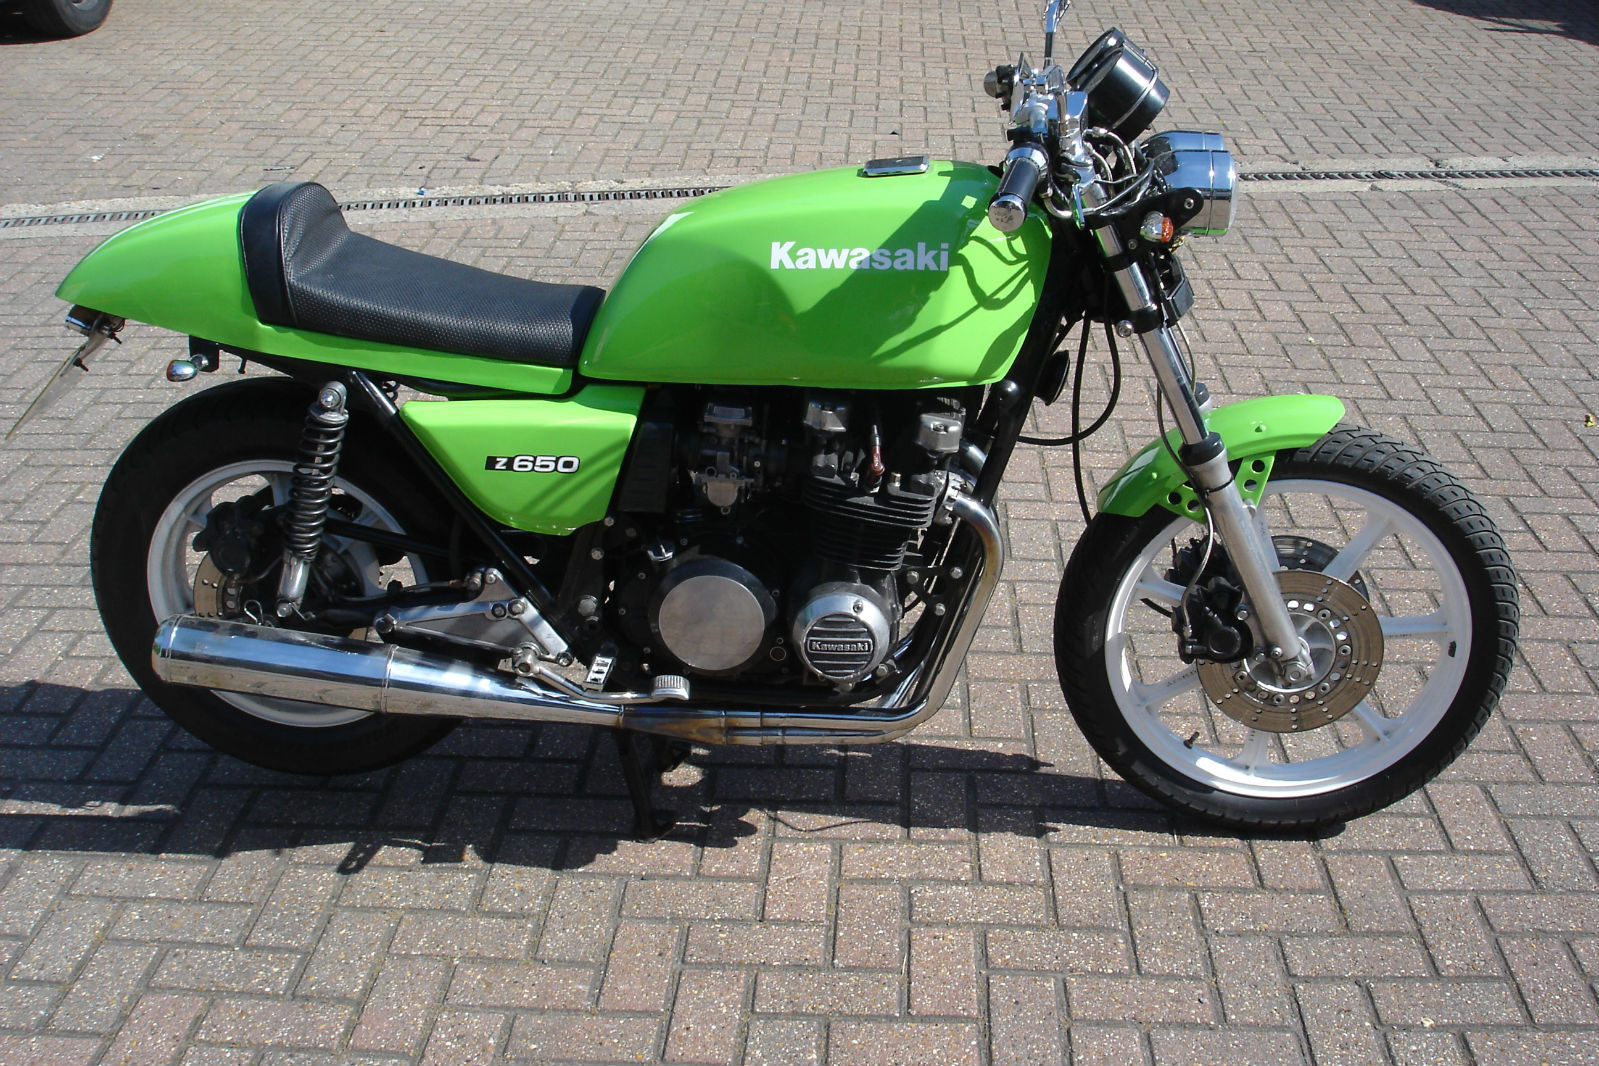 Kawasaki KZ750 Classic Cafe Motorcycle